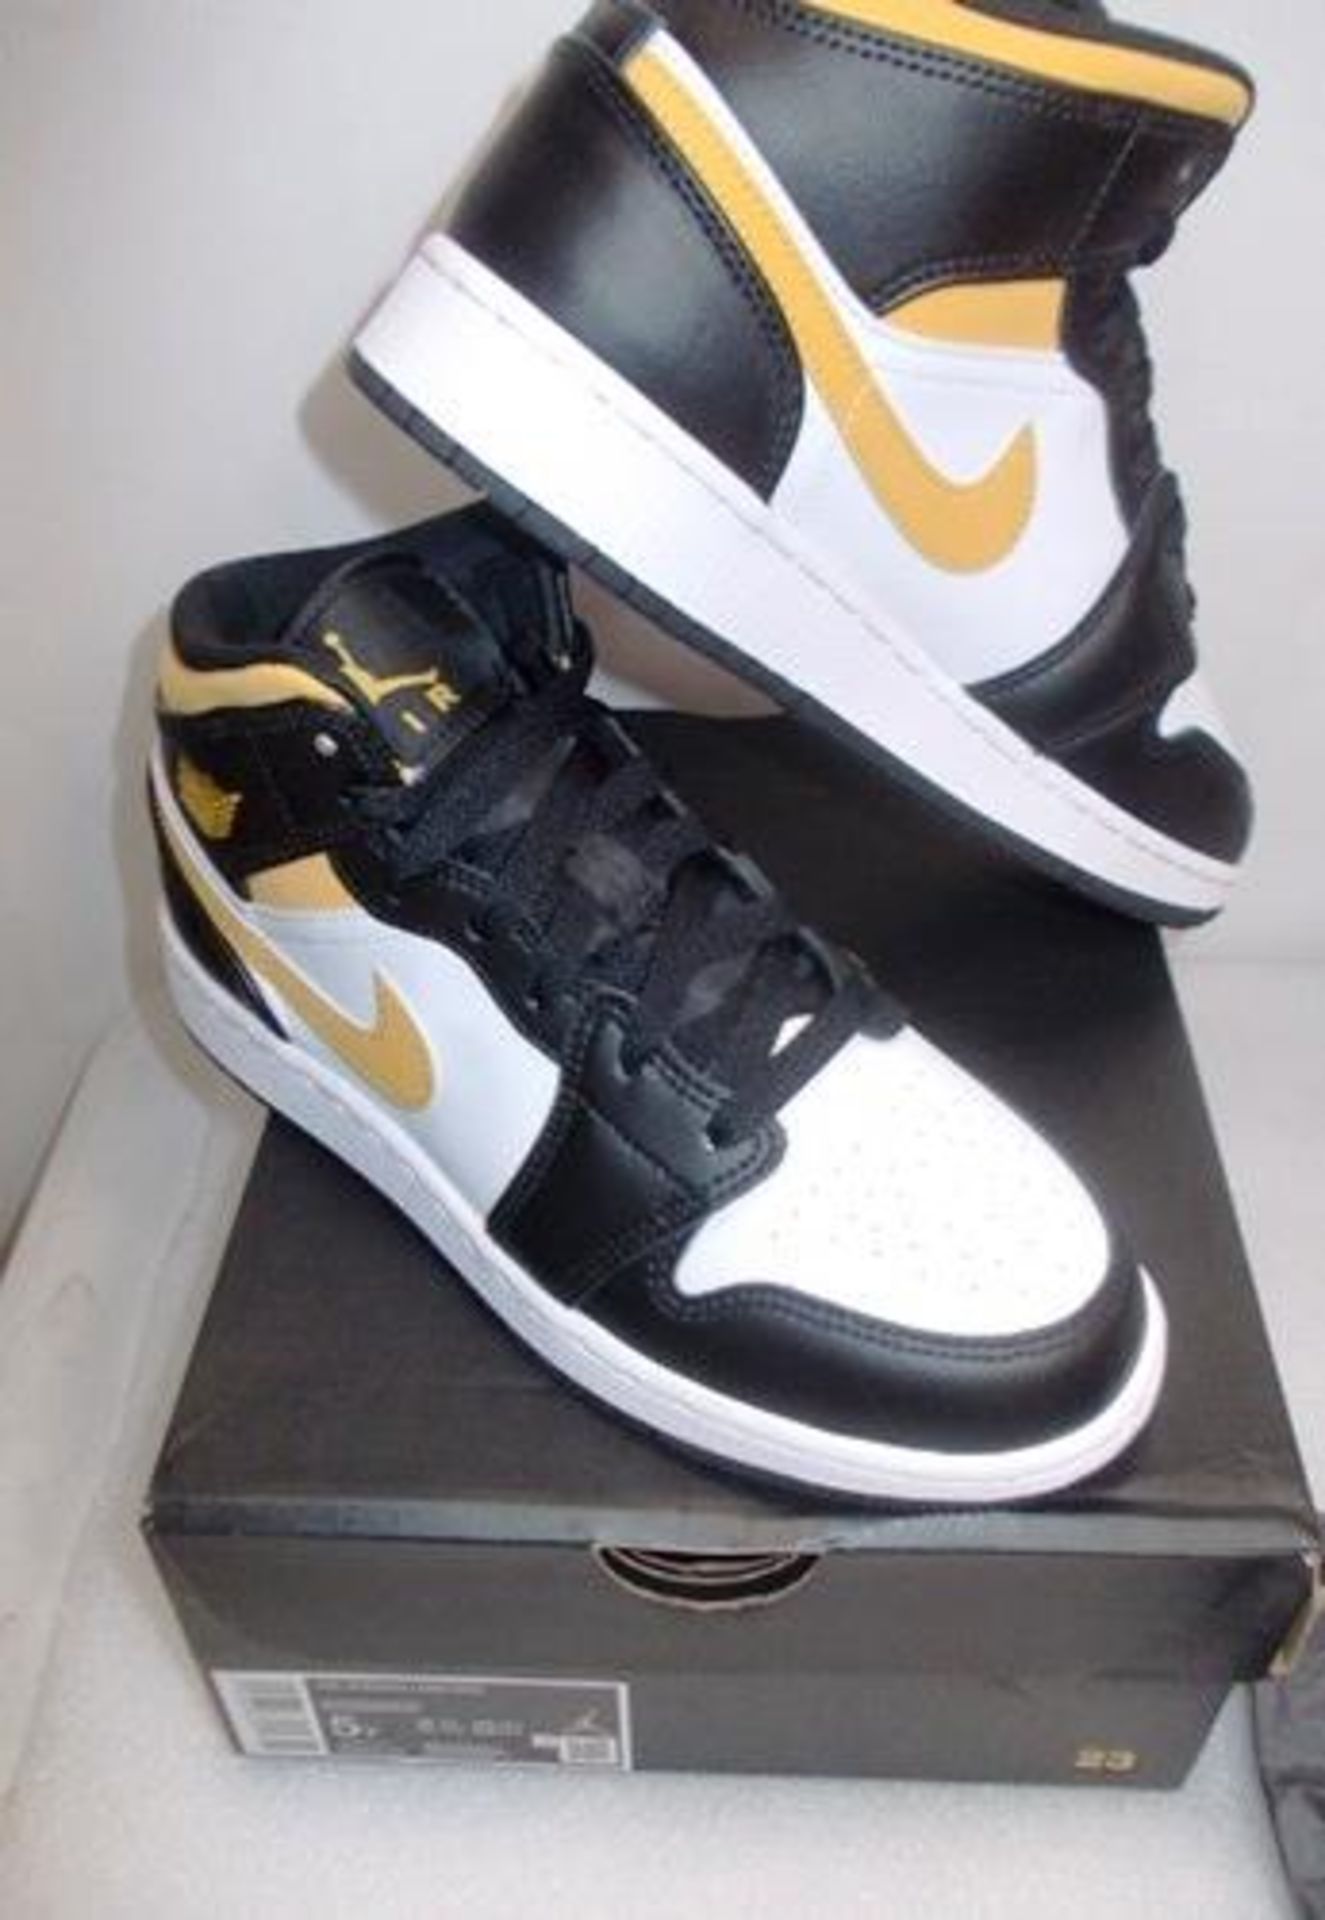 1 x pair Nike Air Jordan 1 Mid trainers, model 554725177m size 4.5 - New in box (E2B)